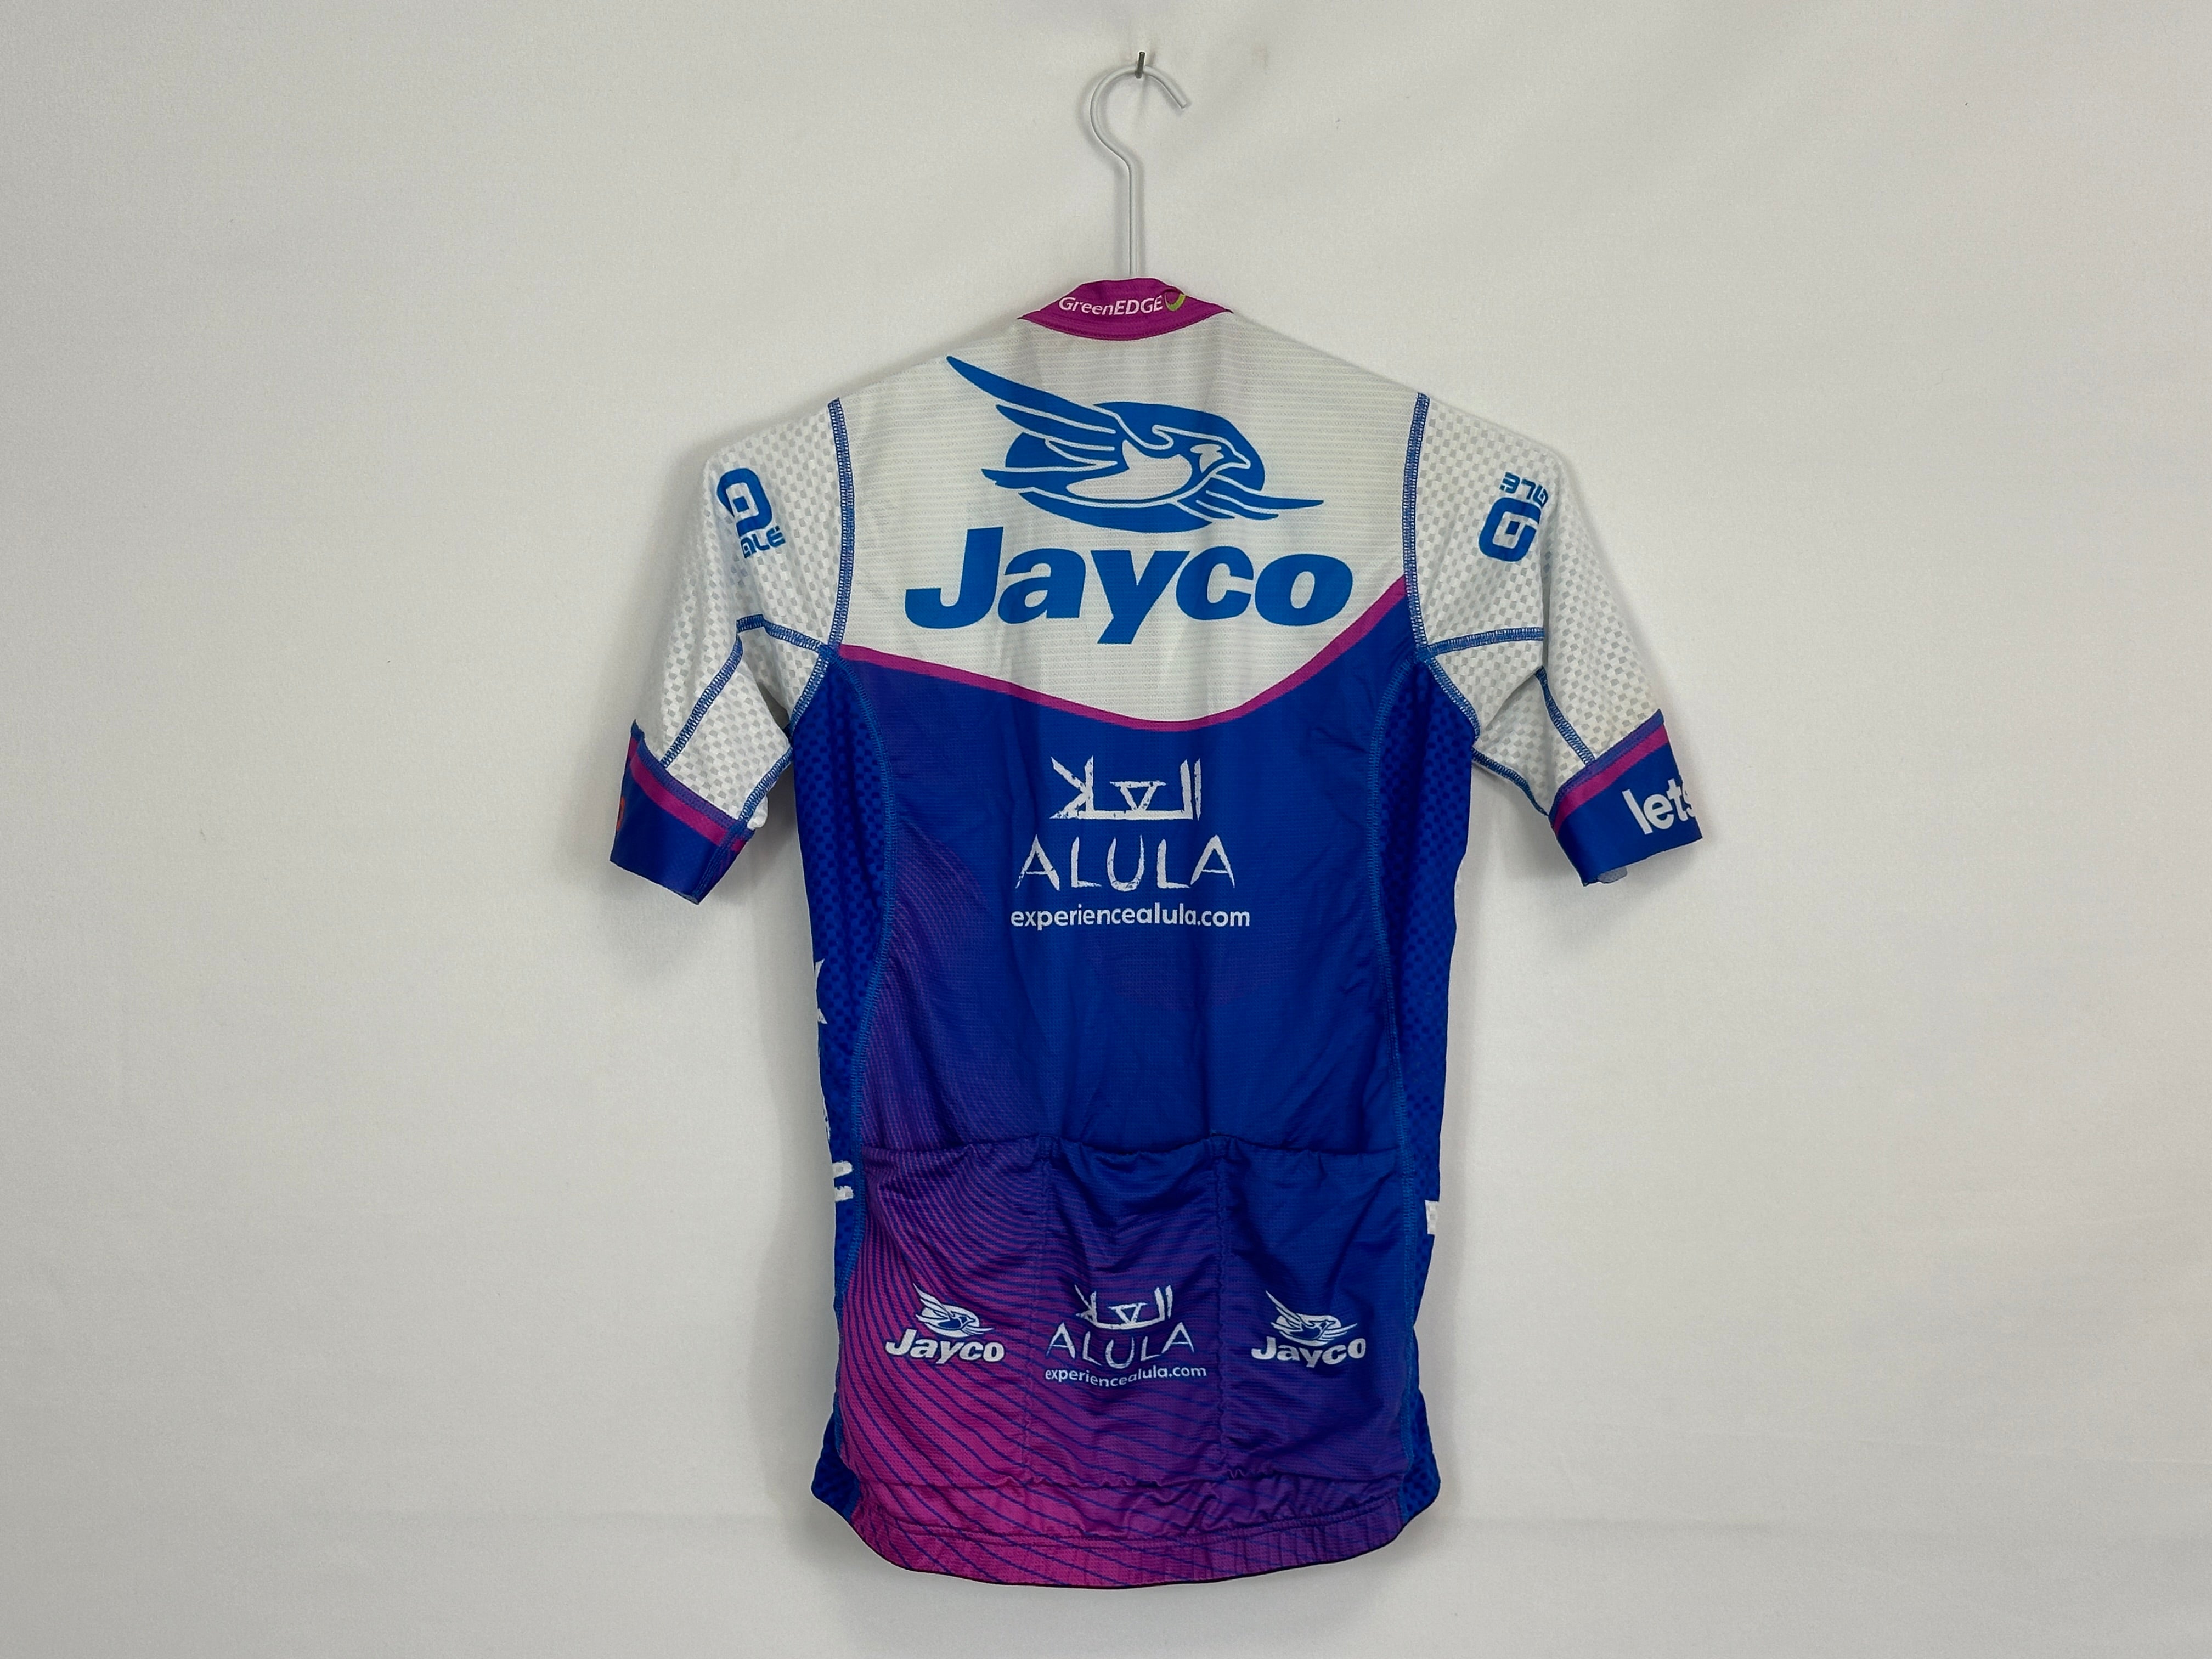 Team Jayco Alula - Maillot ligero S / S de Alé